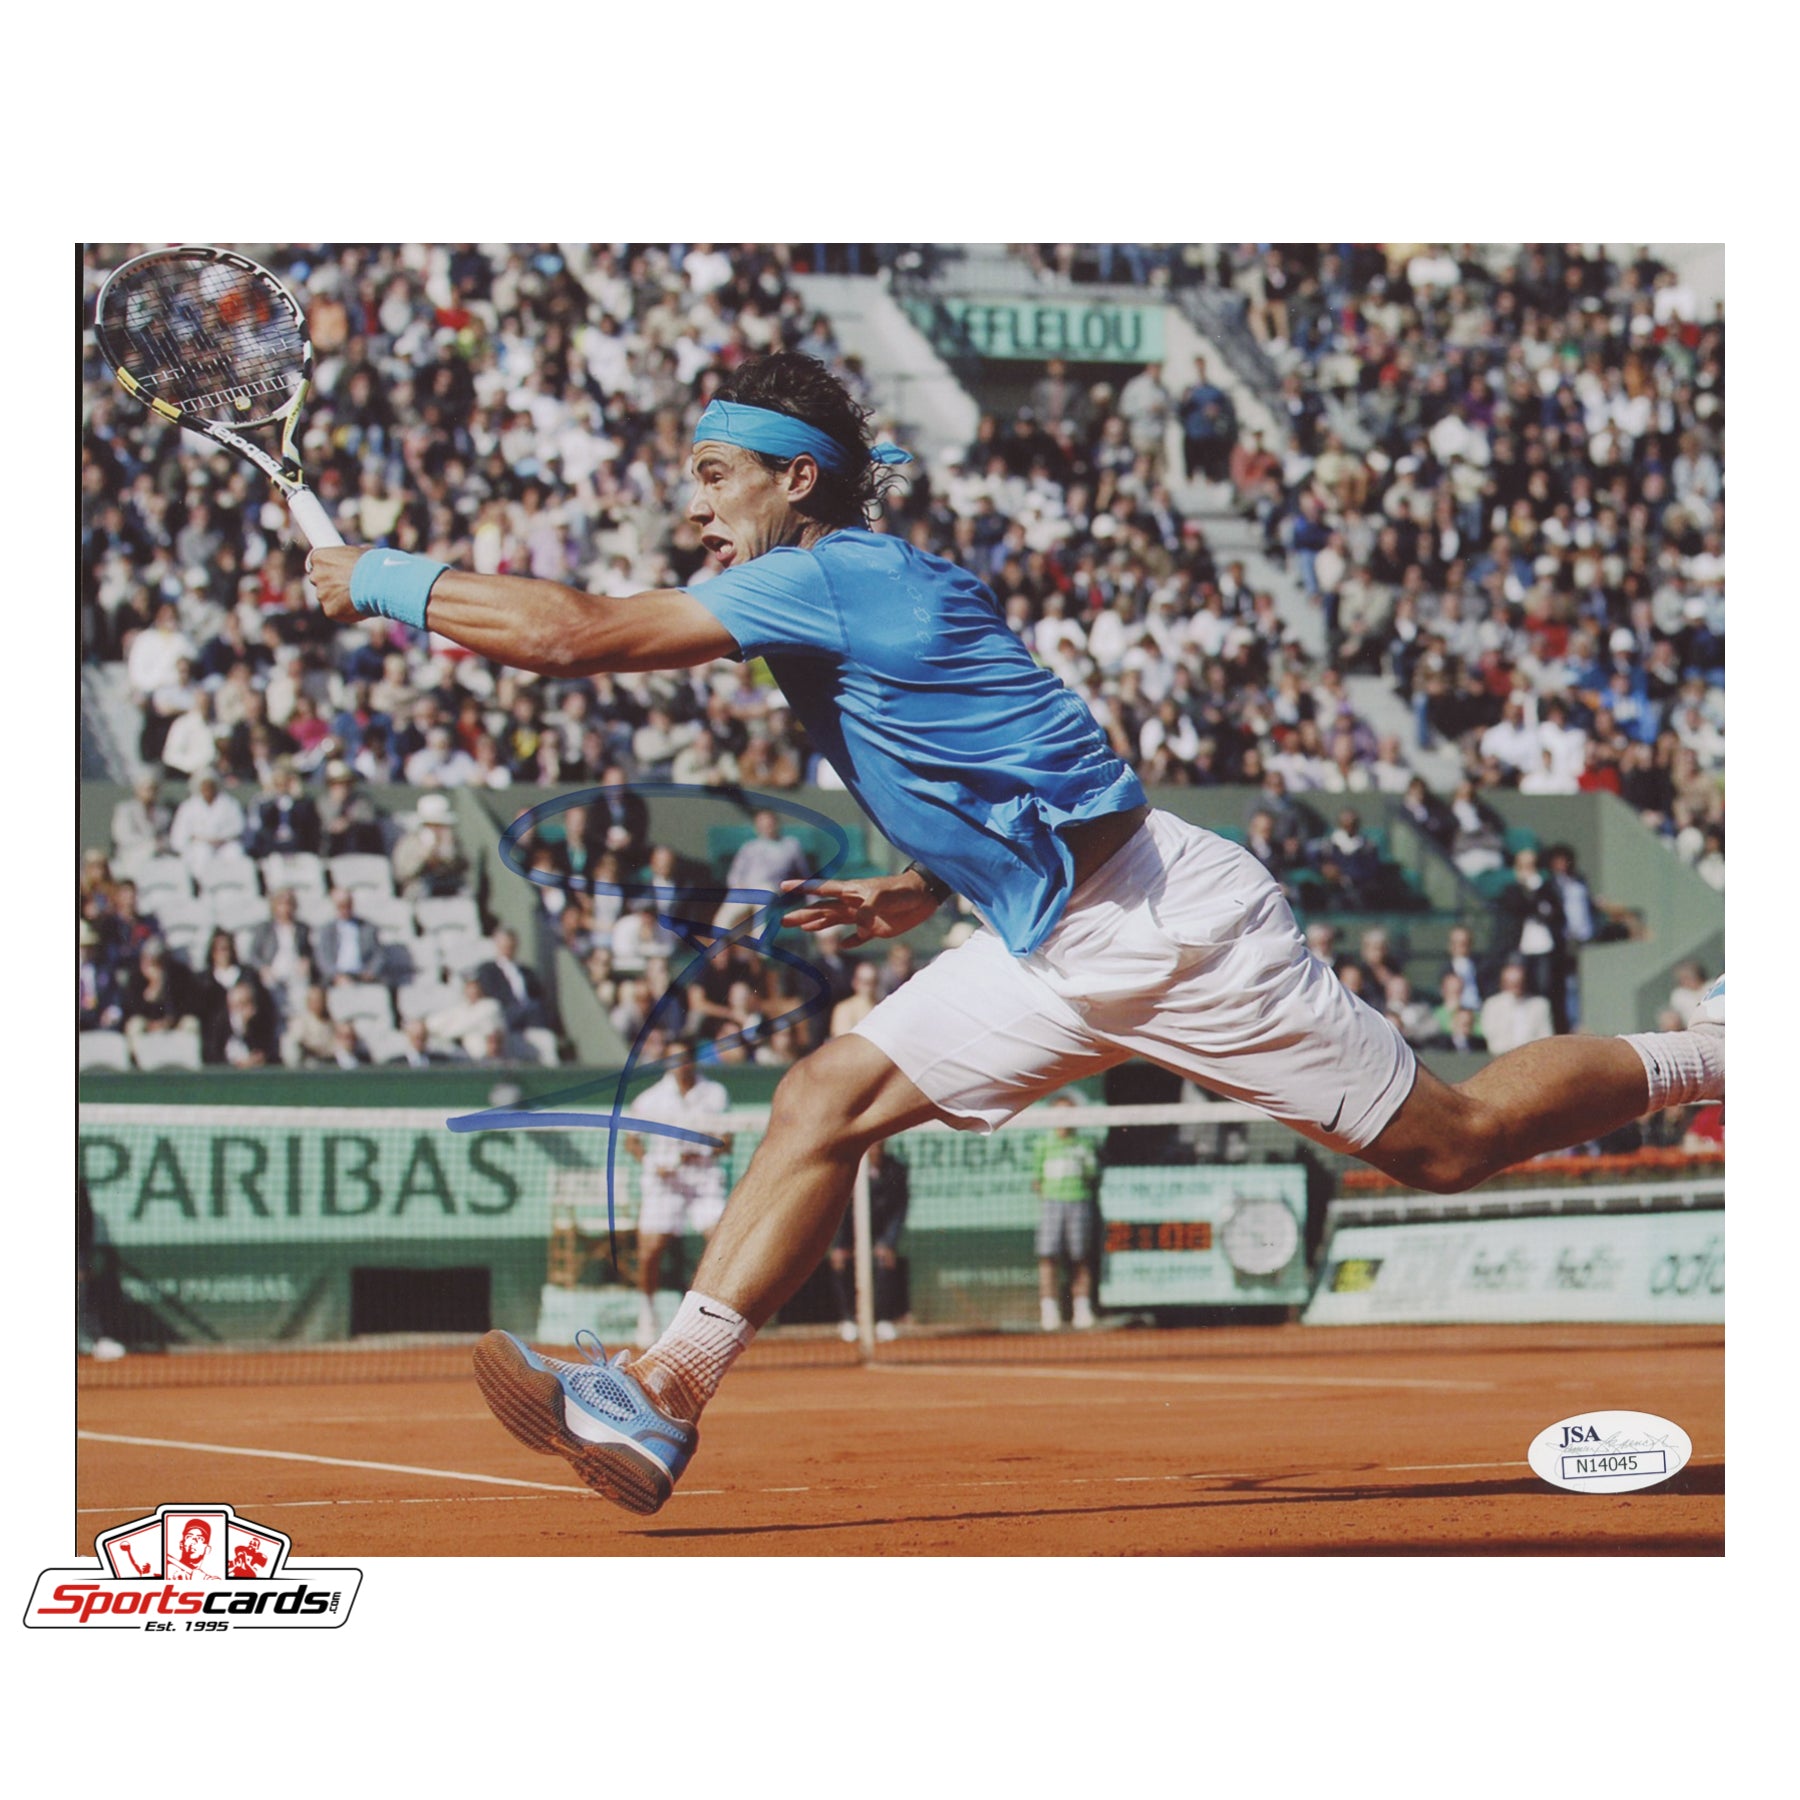 Rafael Nadal Signed 8x10 Photograph - JSA COA